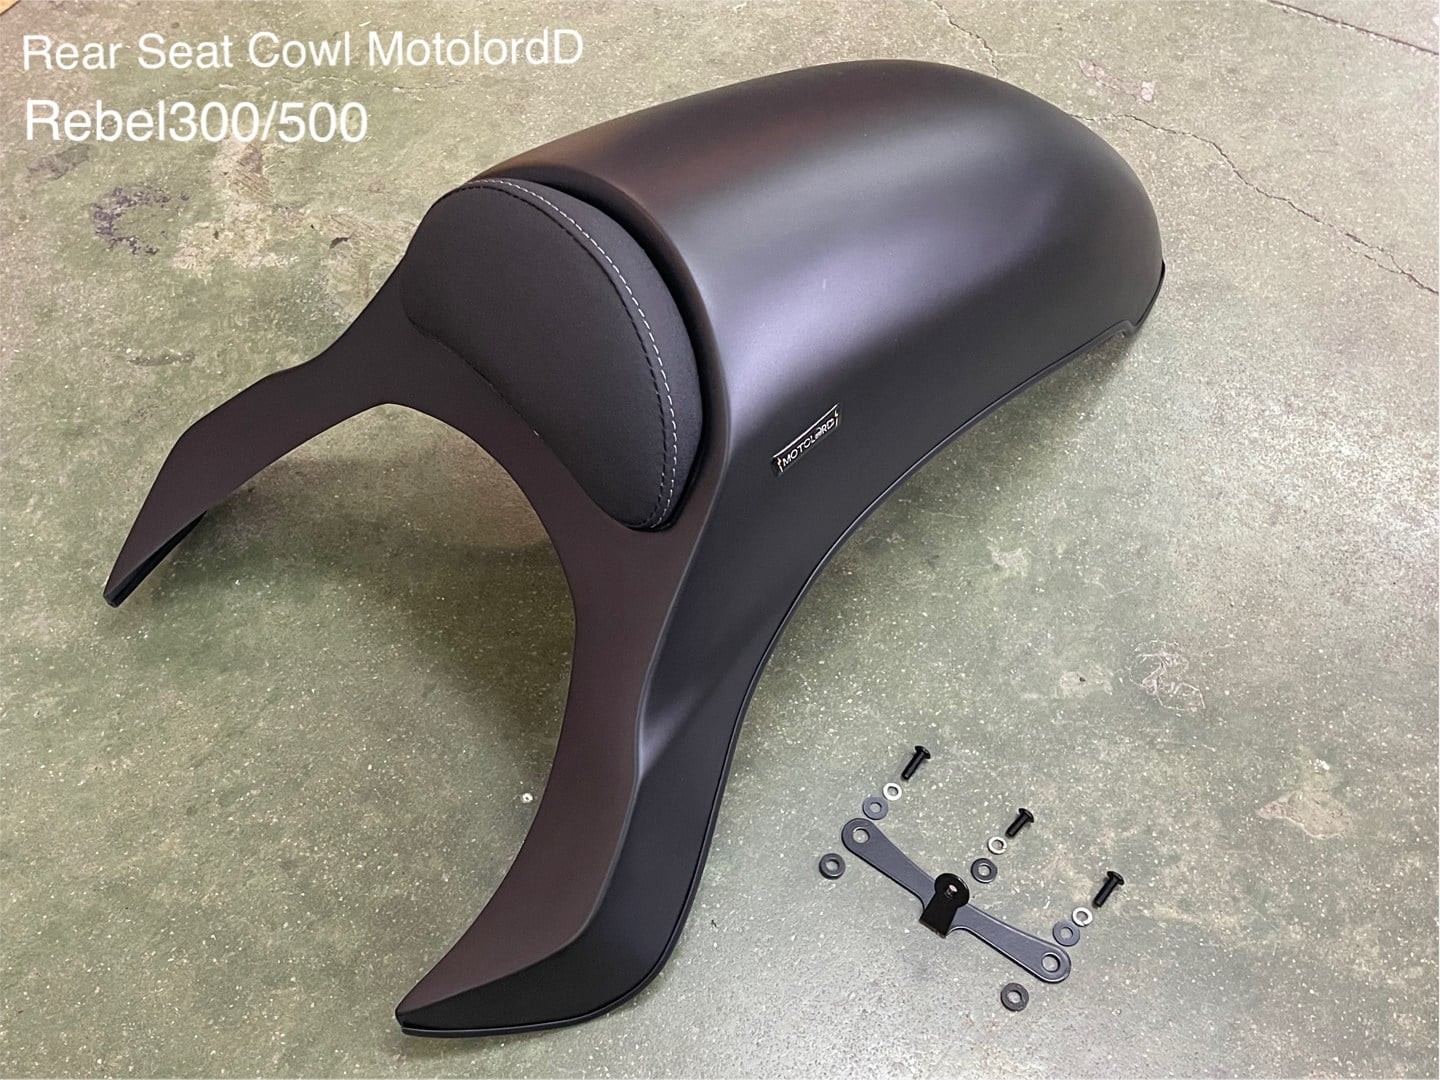 Rear Seat Cowl MotolordD For Honda Rebel 300 500 ( Black Color )